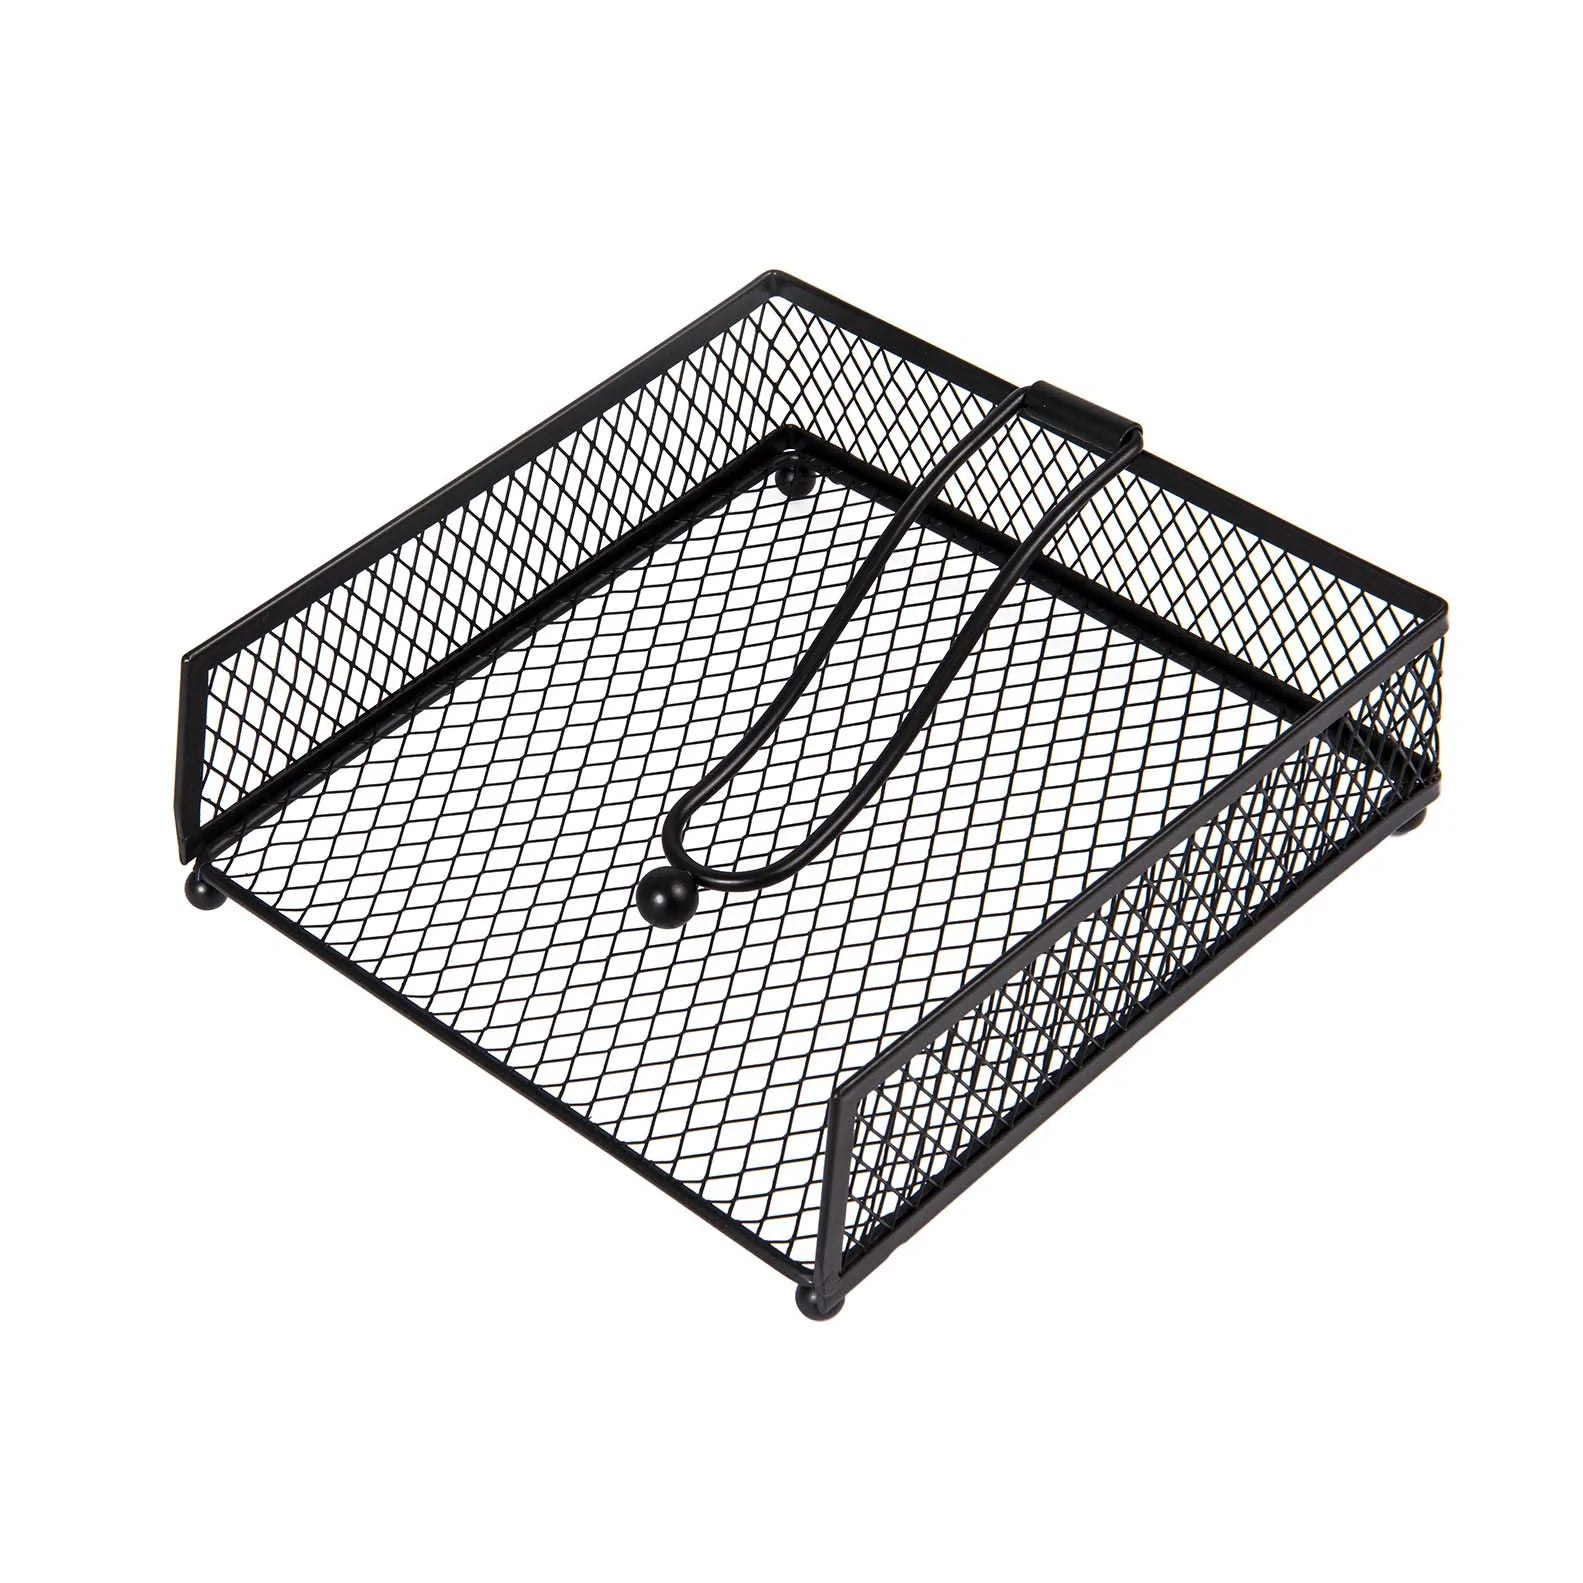 Porta servilletas en la línea de filo de metal de malla negra –19 cm